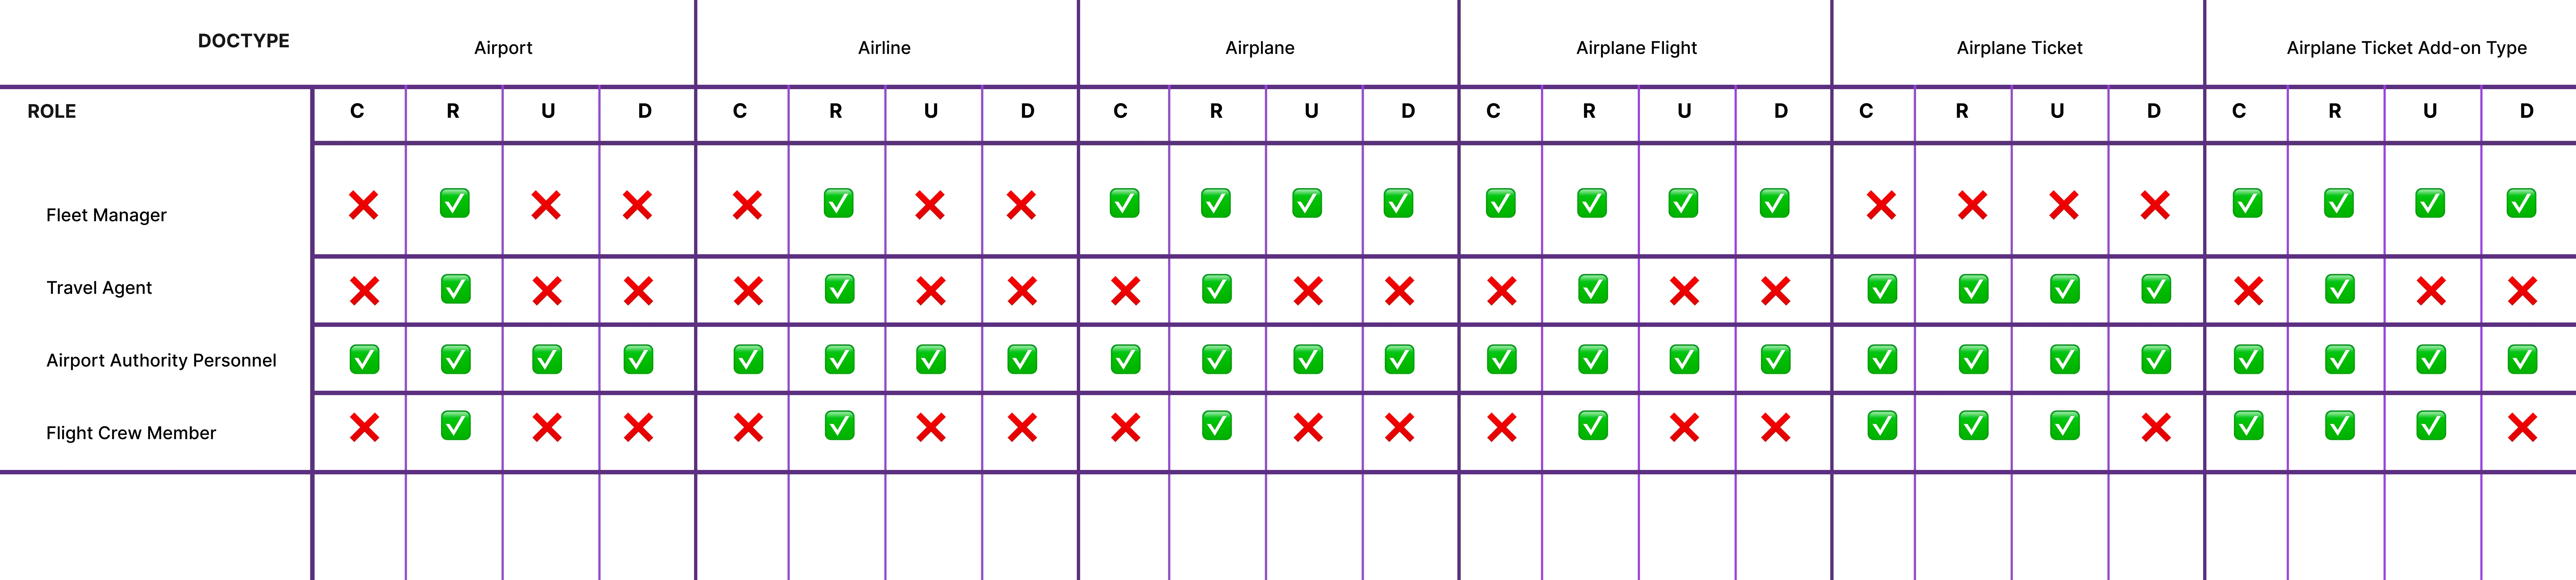 Airplane Mode Role-Permission Matrix